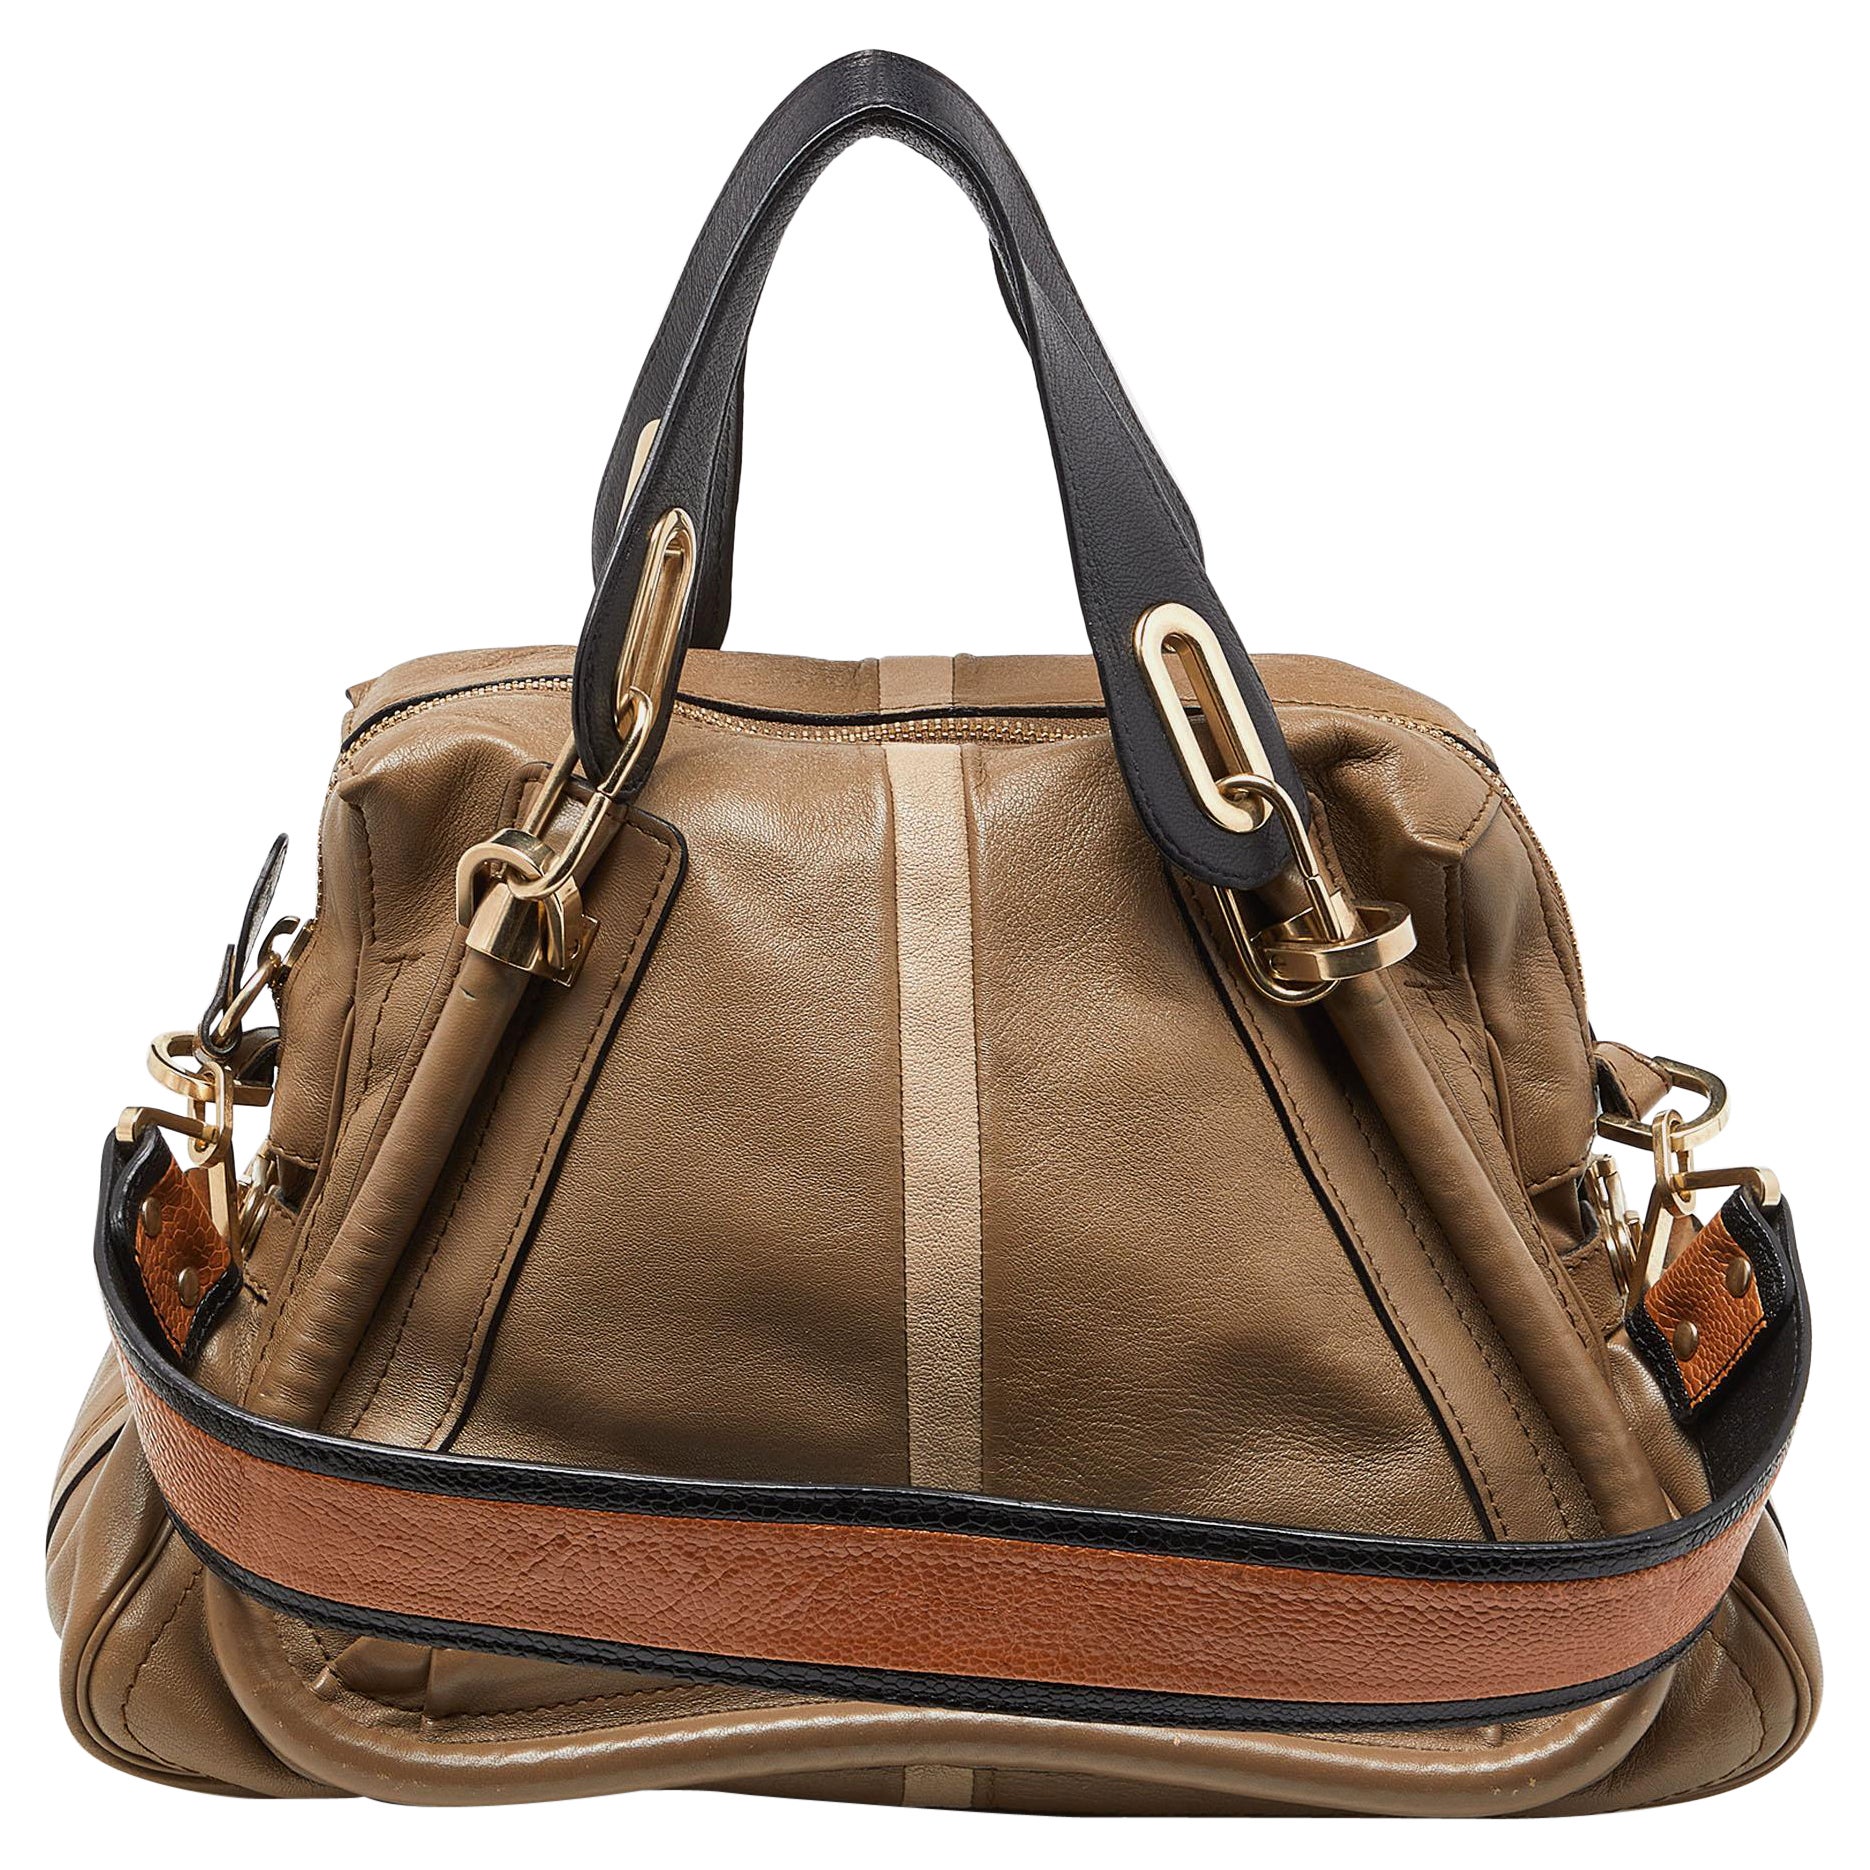 Chloe Beige/Black Leather Medium Paraty Handbag For Sale